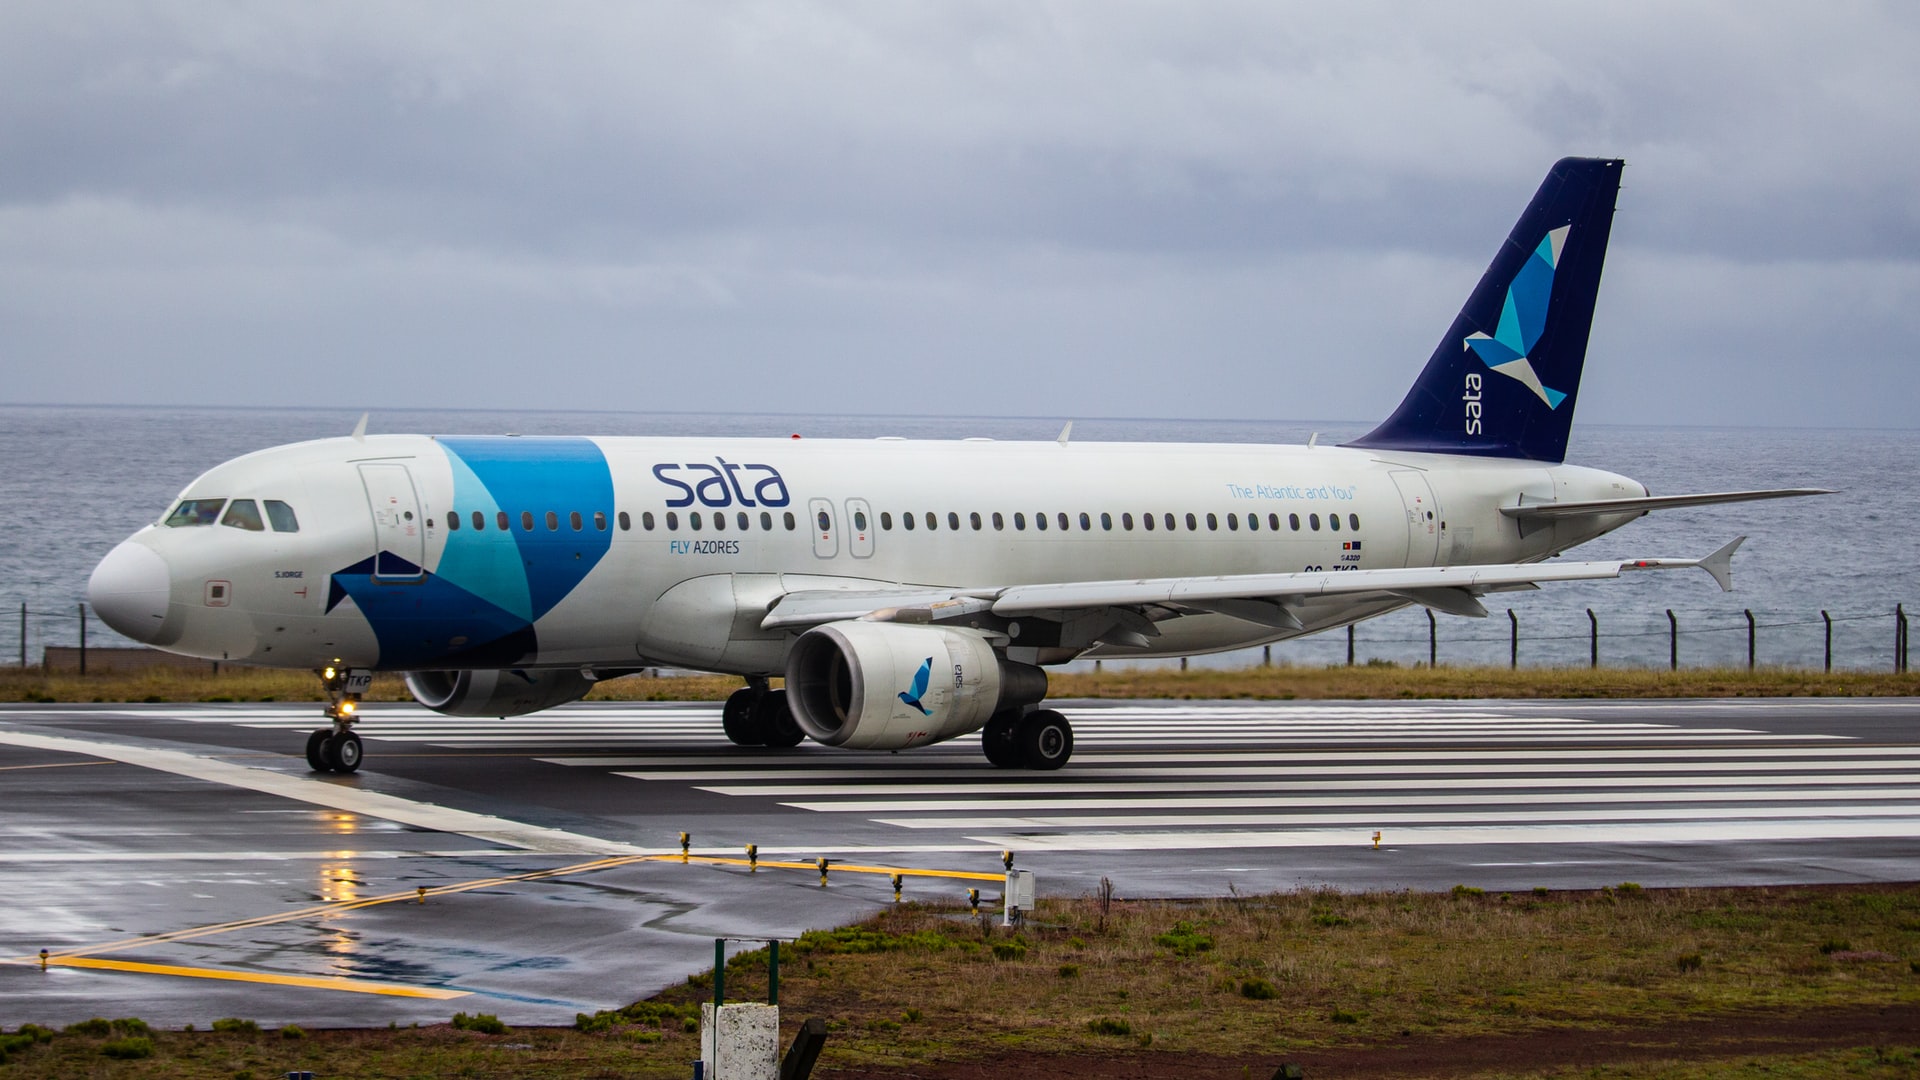 Azores Airways at Pico Airport